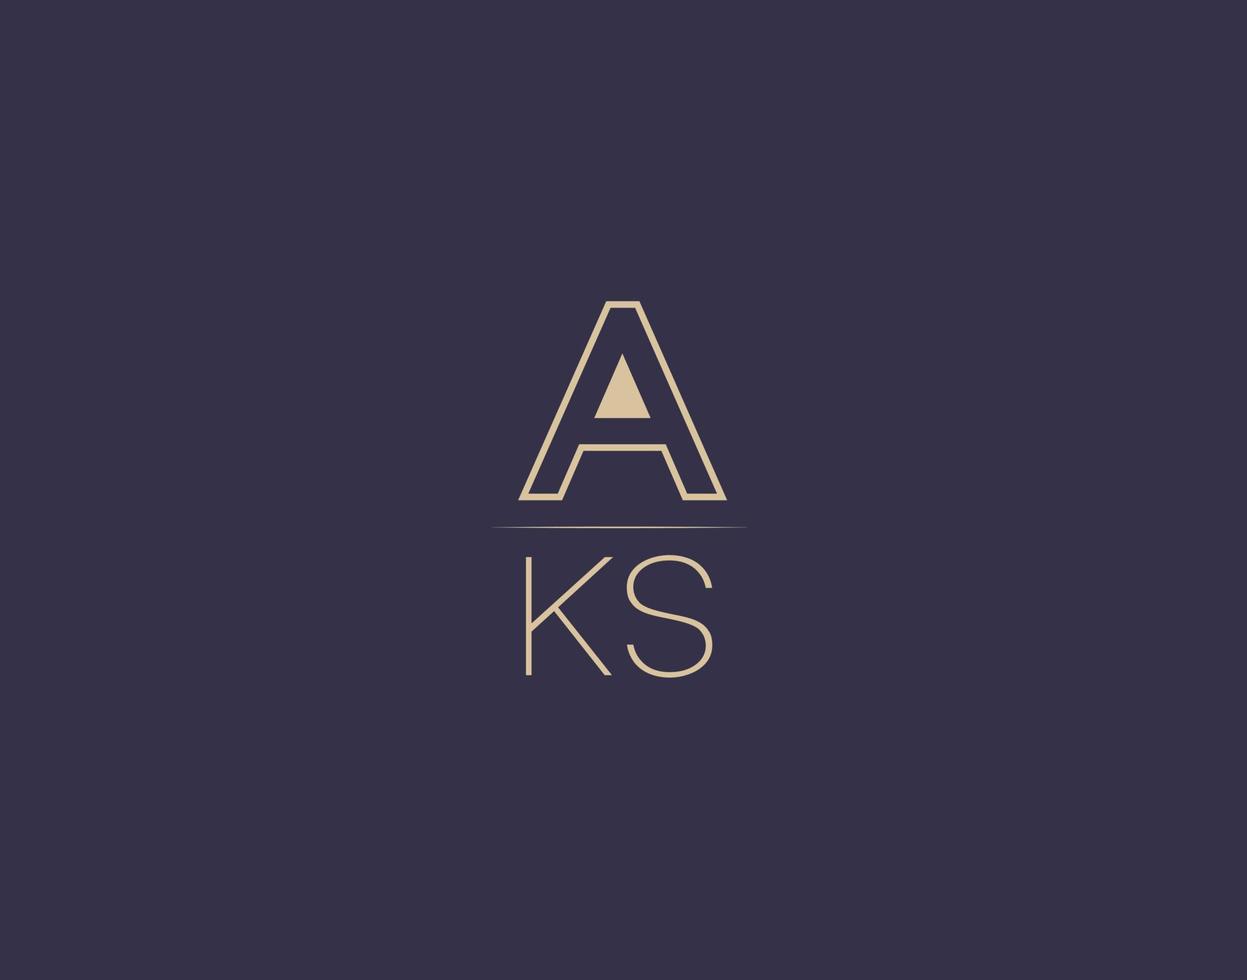 aks letter logo design imagens vetoriais minimalistas modernas vetor